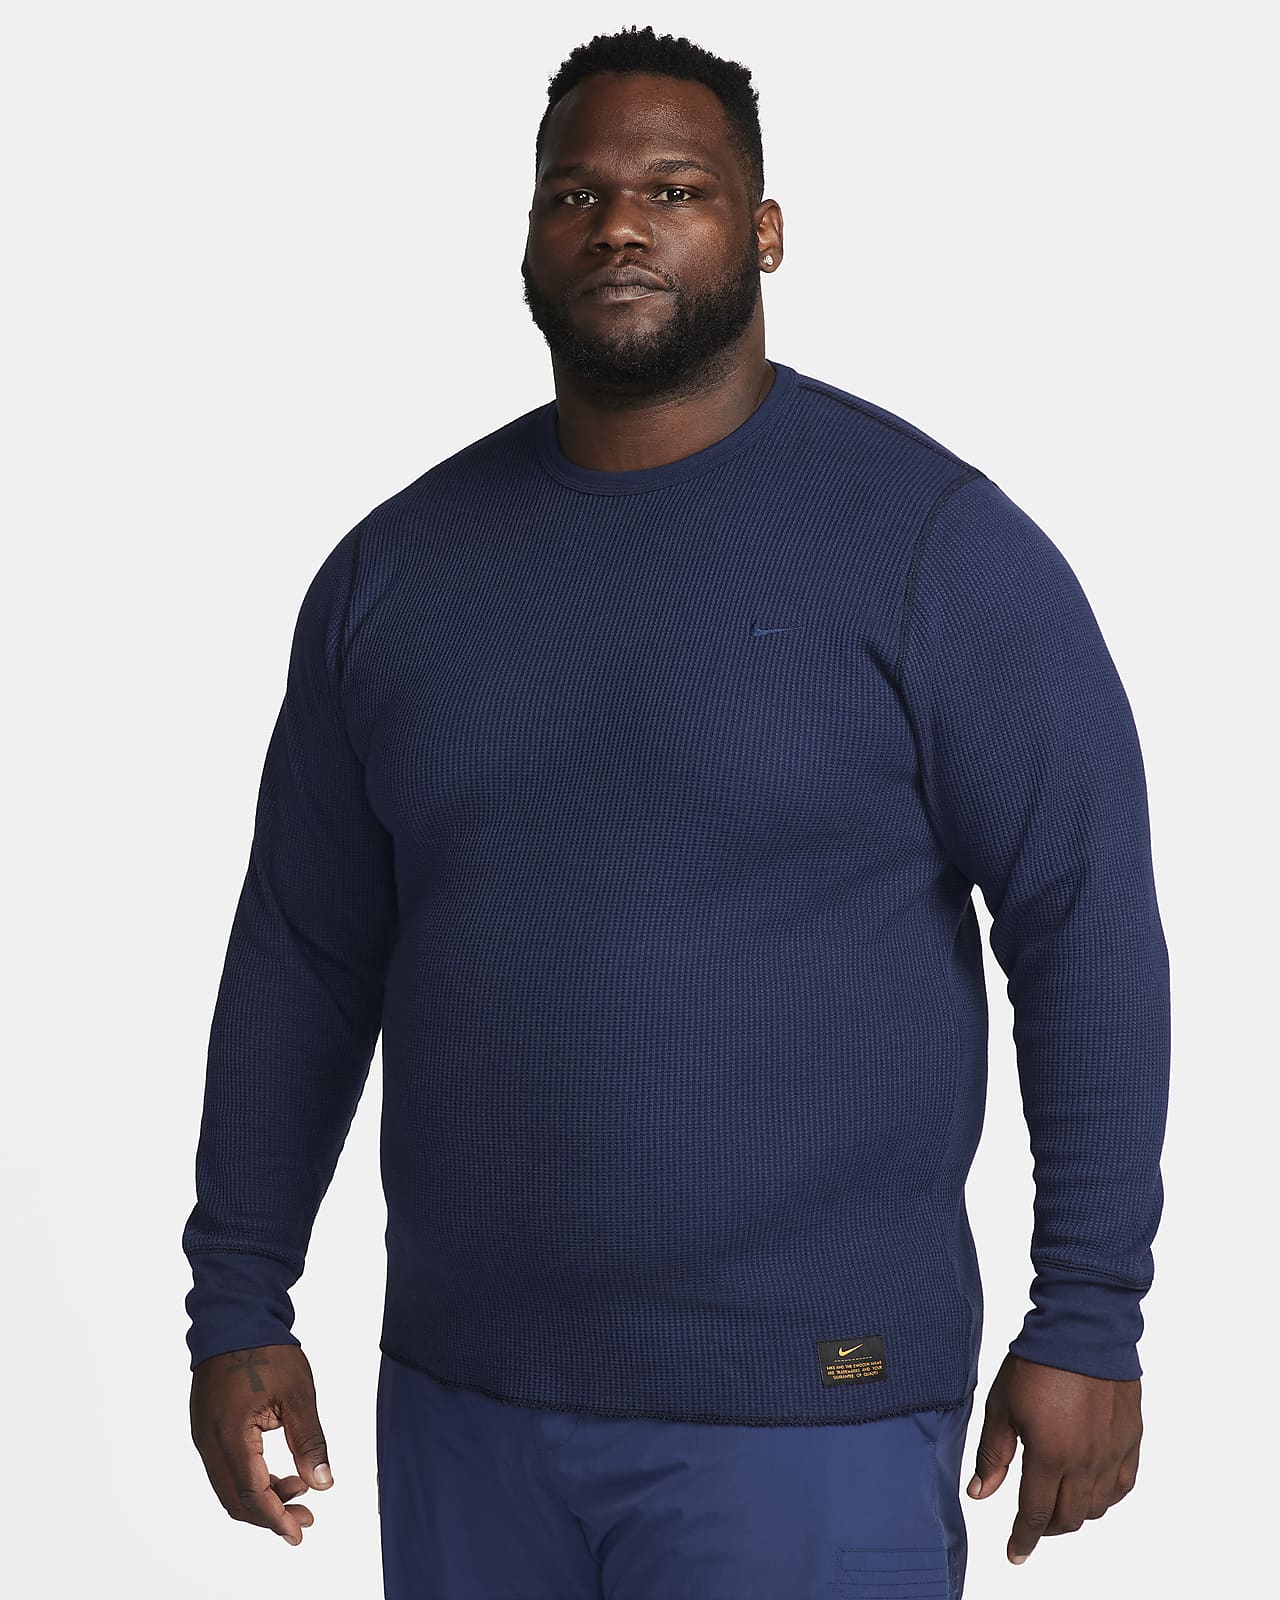 Nike Life Men's Long-sleeve Heavyweight Waffle Top